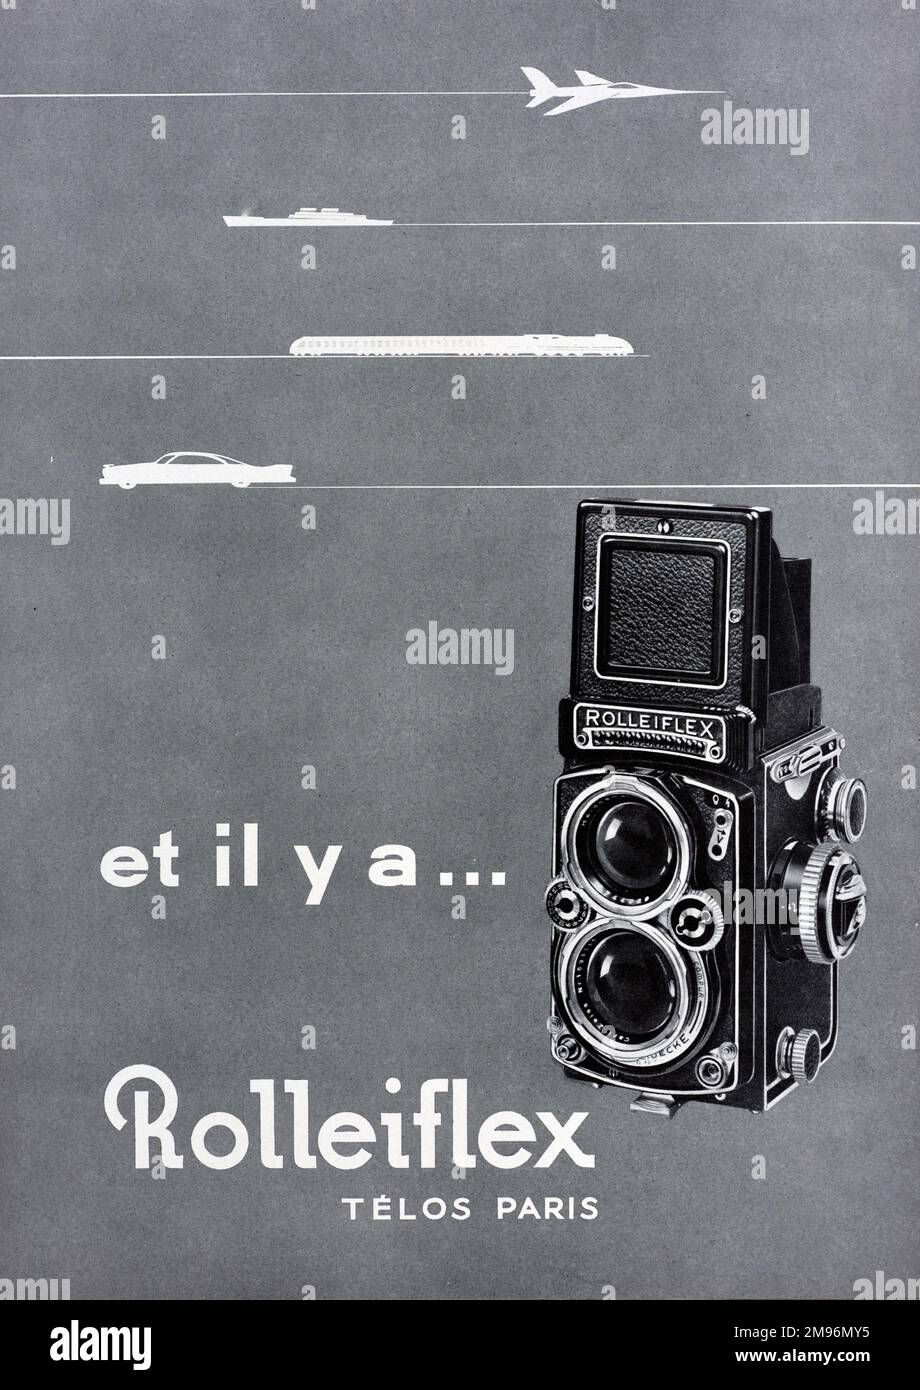 Rolleiflex Advert 1957. Vintage or Old Advert, Advertisement, Publicity or Illustration for Vintage Rolleiflex Camera 1957 Stock Photo